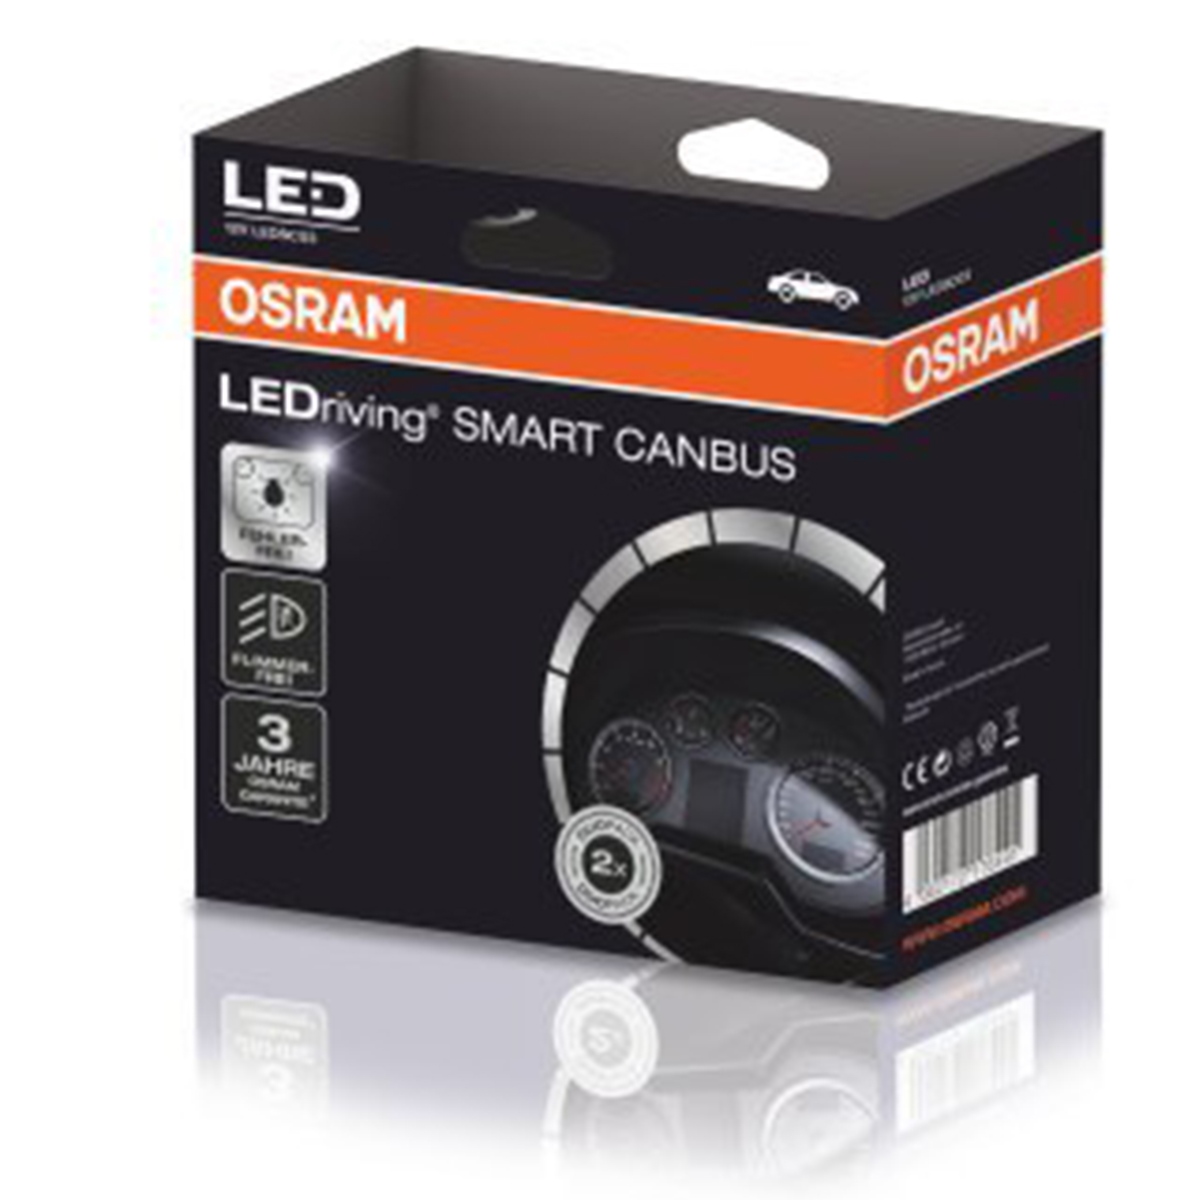 OSRAM LEDSC03 LEDriving SMART CANBUS Adapter für H7 auf LED